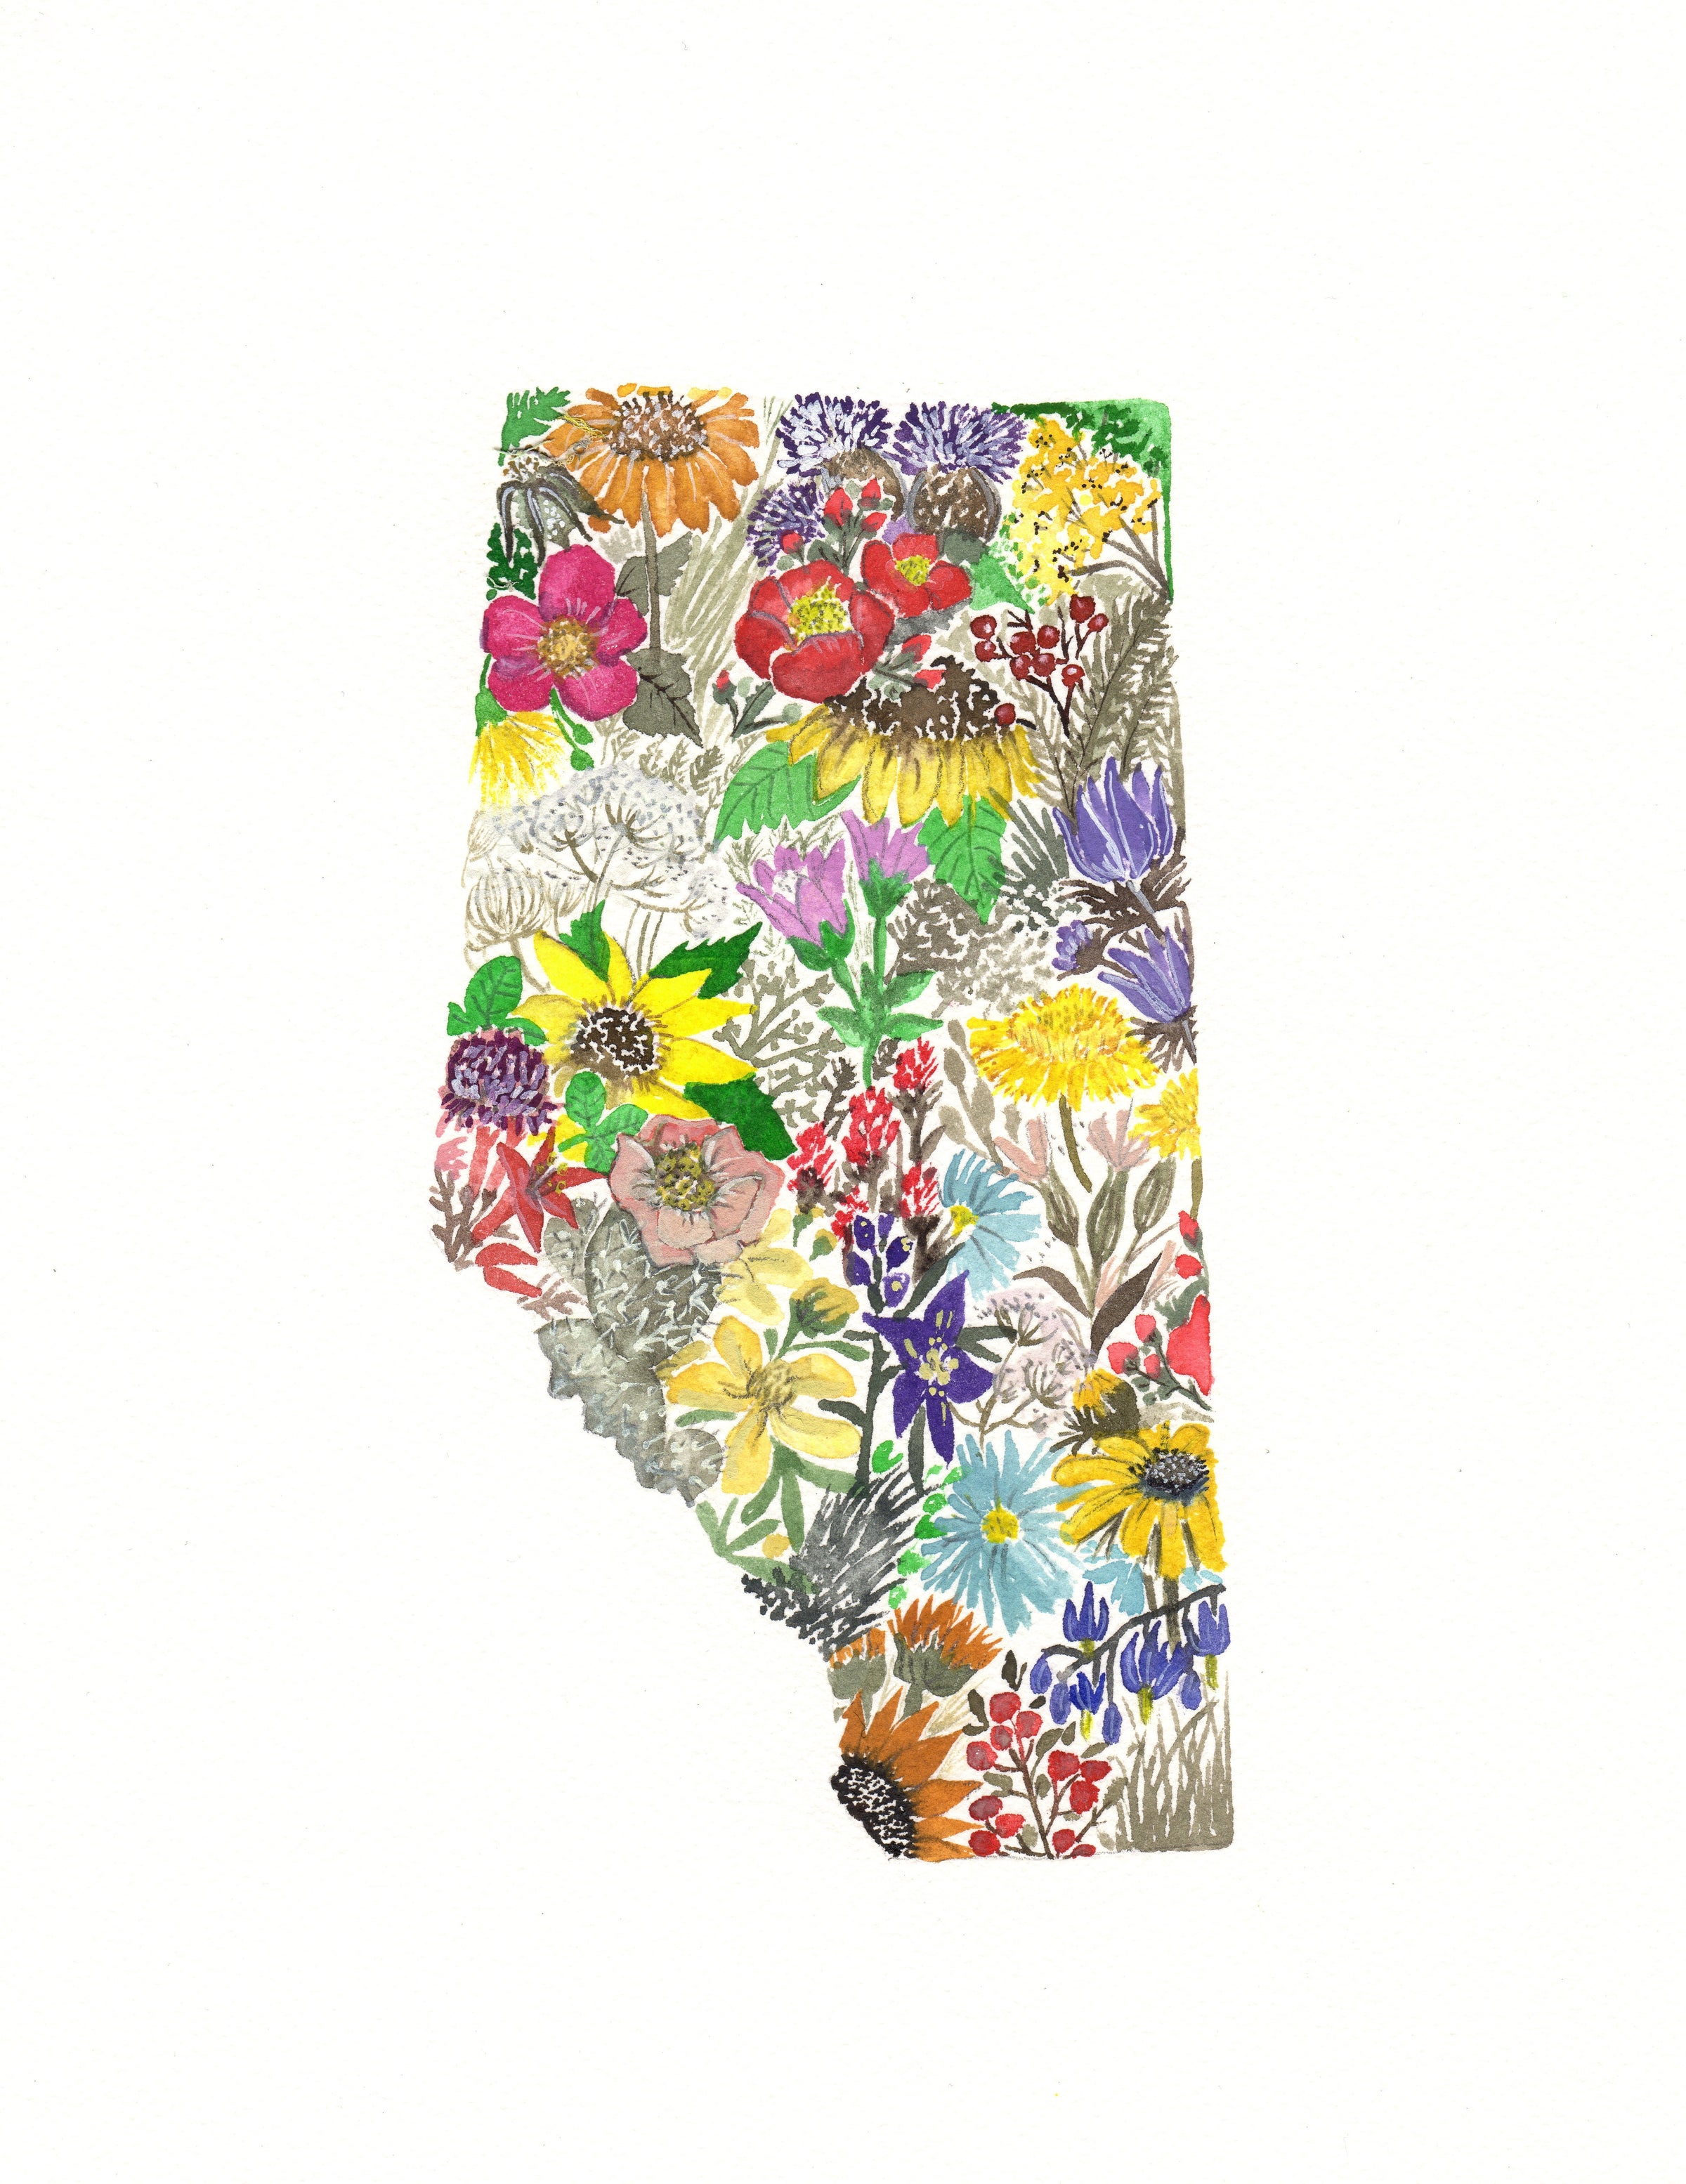 Wildflowers of Alberta- Archival Print